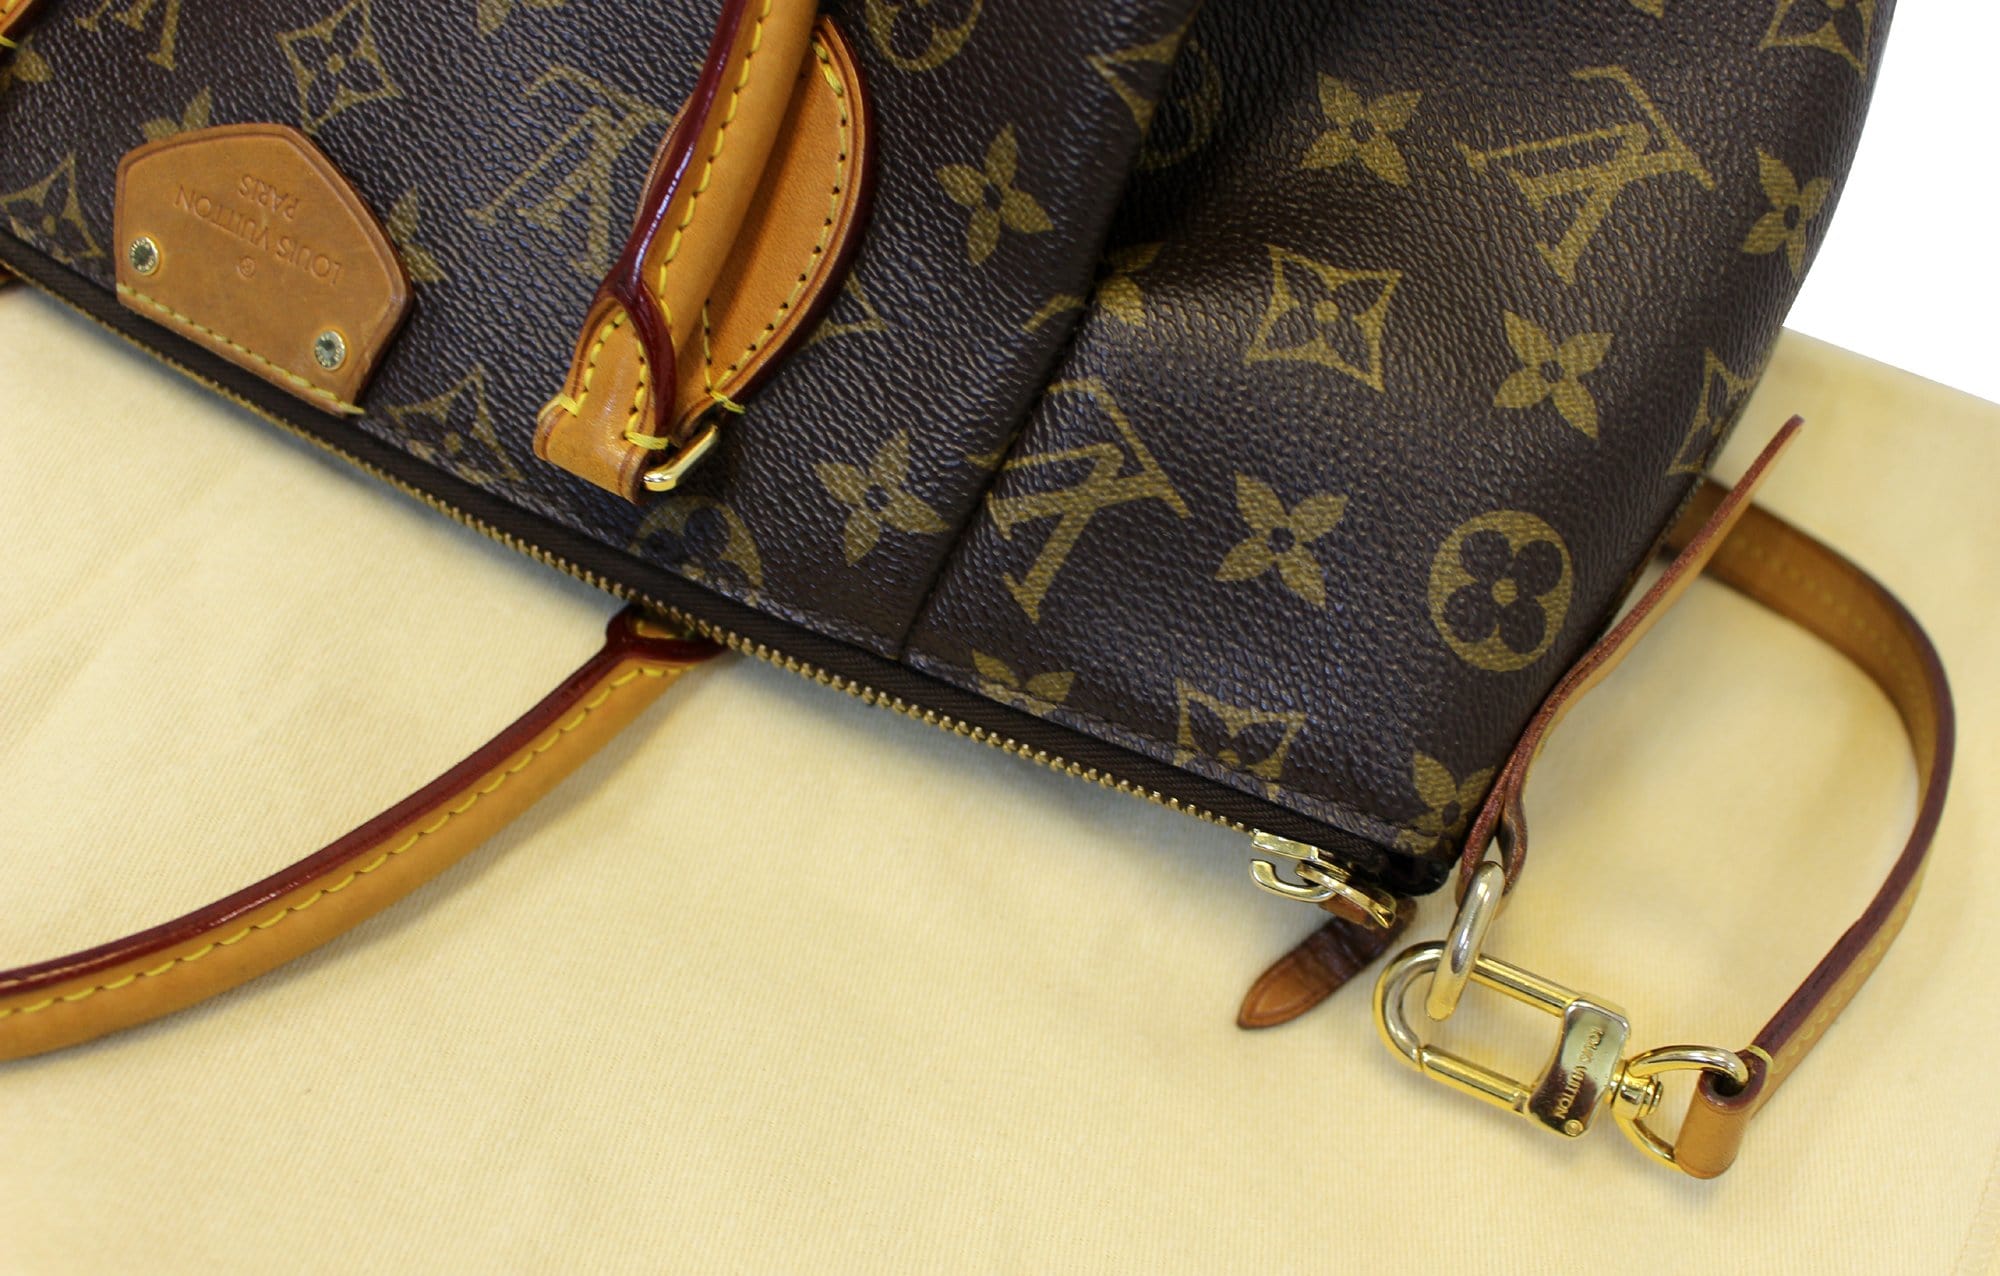 Turenne cloth crossbody bag Louis Vuitton Multicolour in Cloth